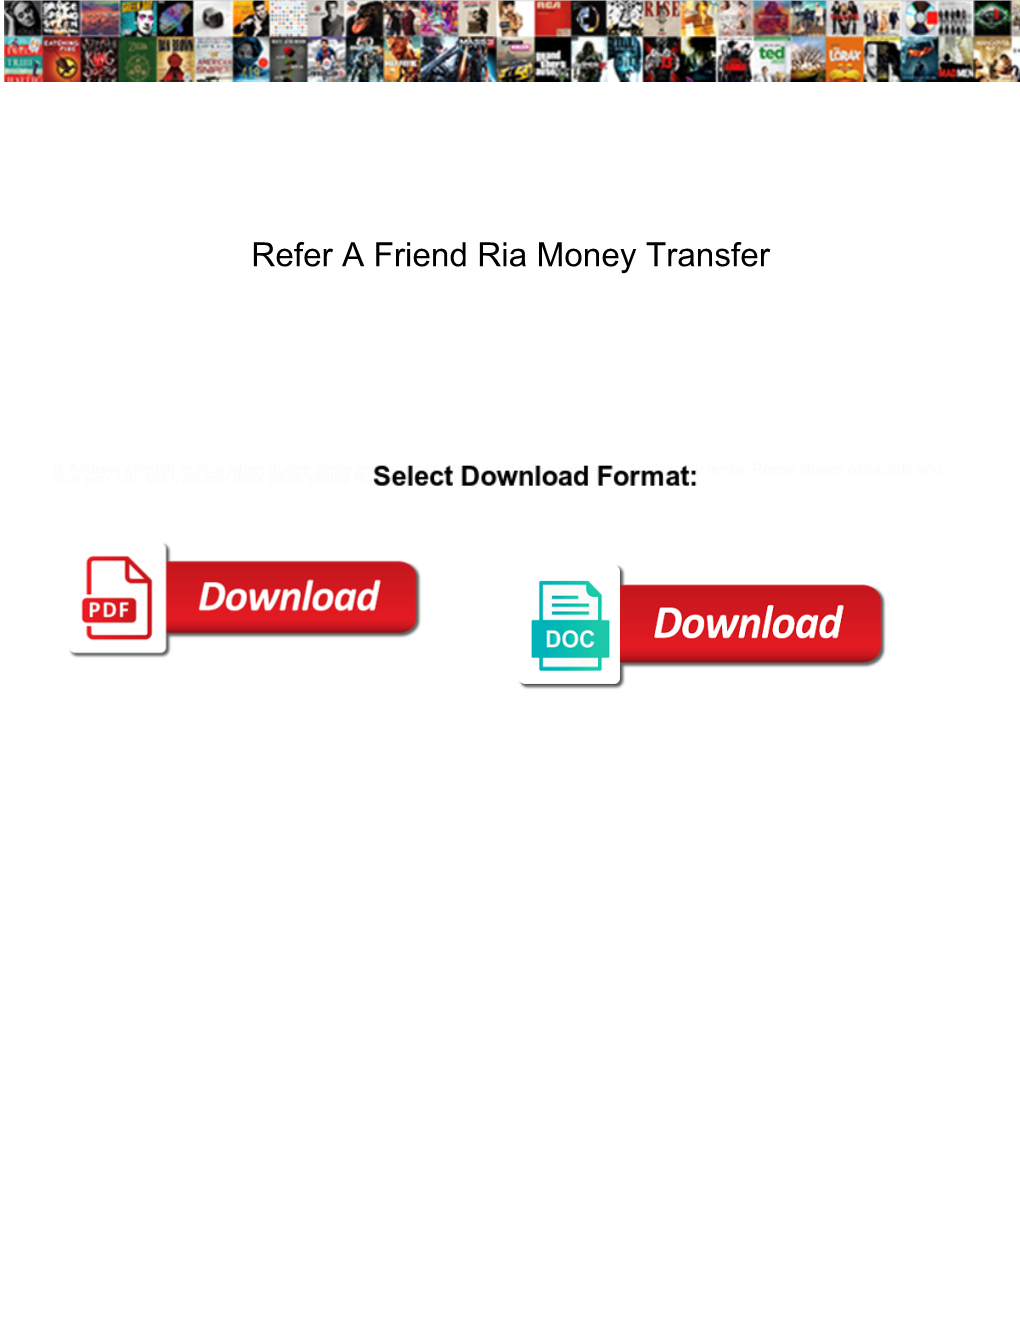 Refer a Friend Ria Money Transfer